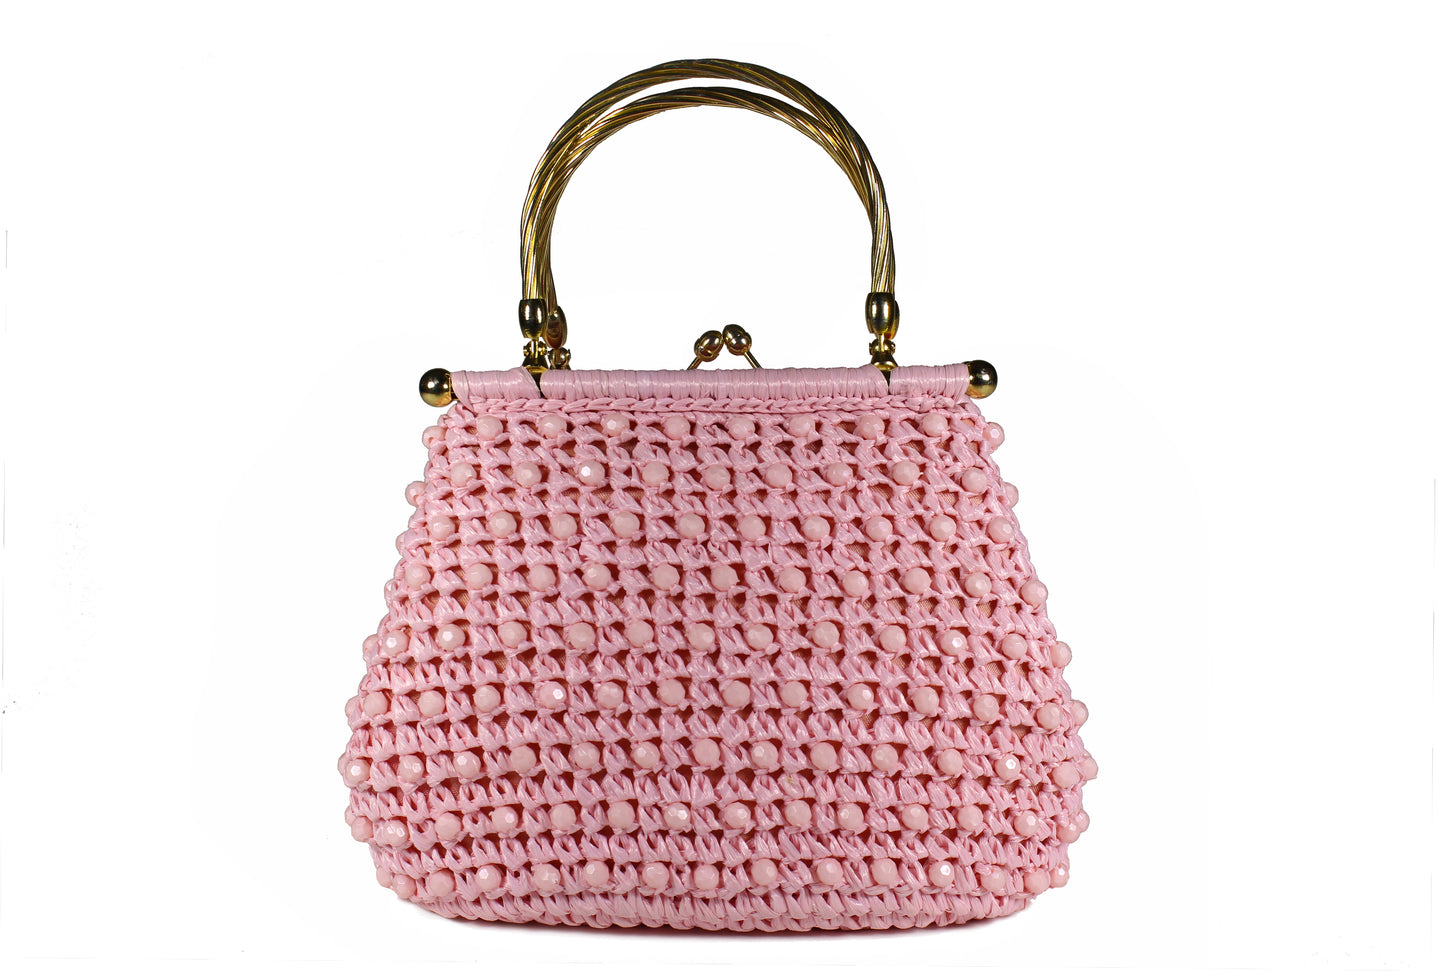 Pink raffia and beads handbag